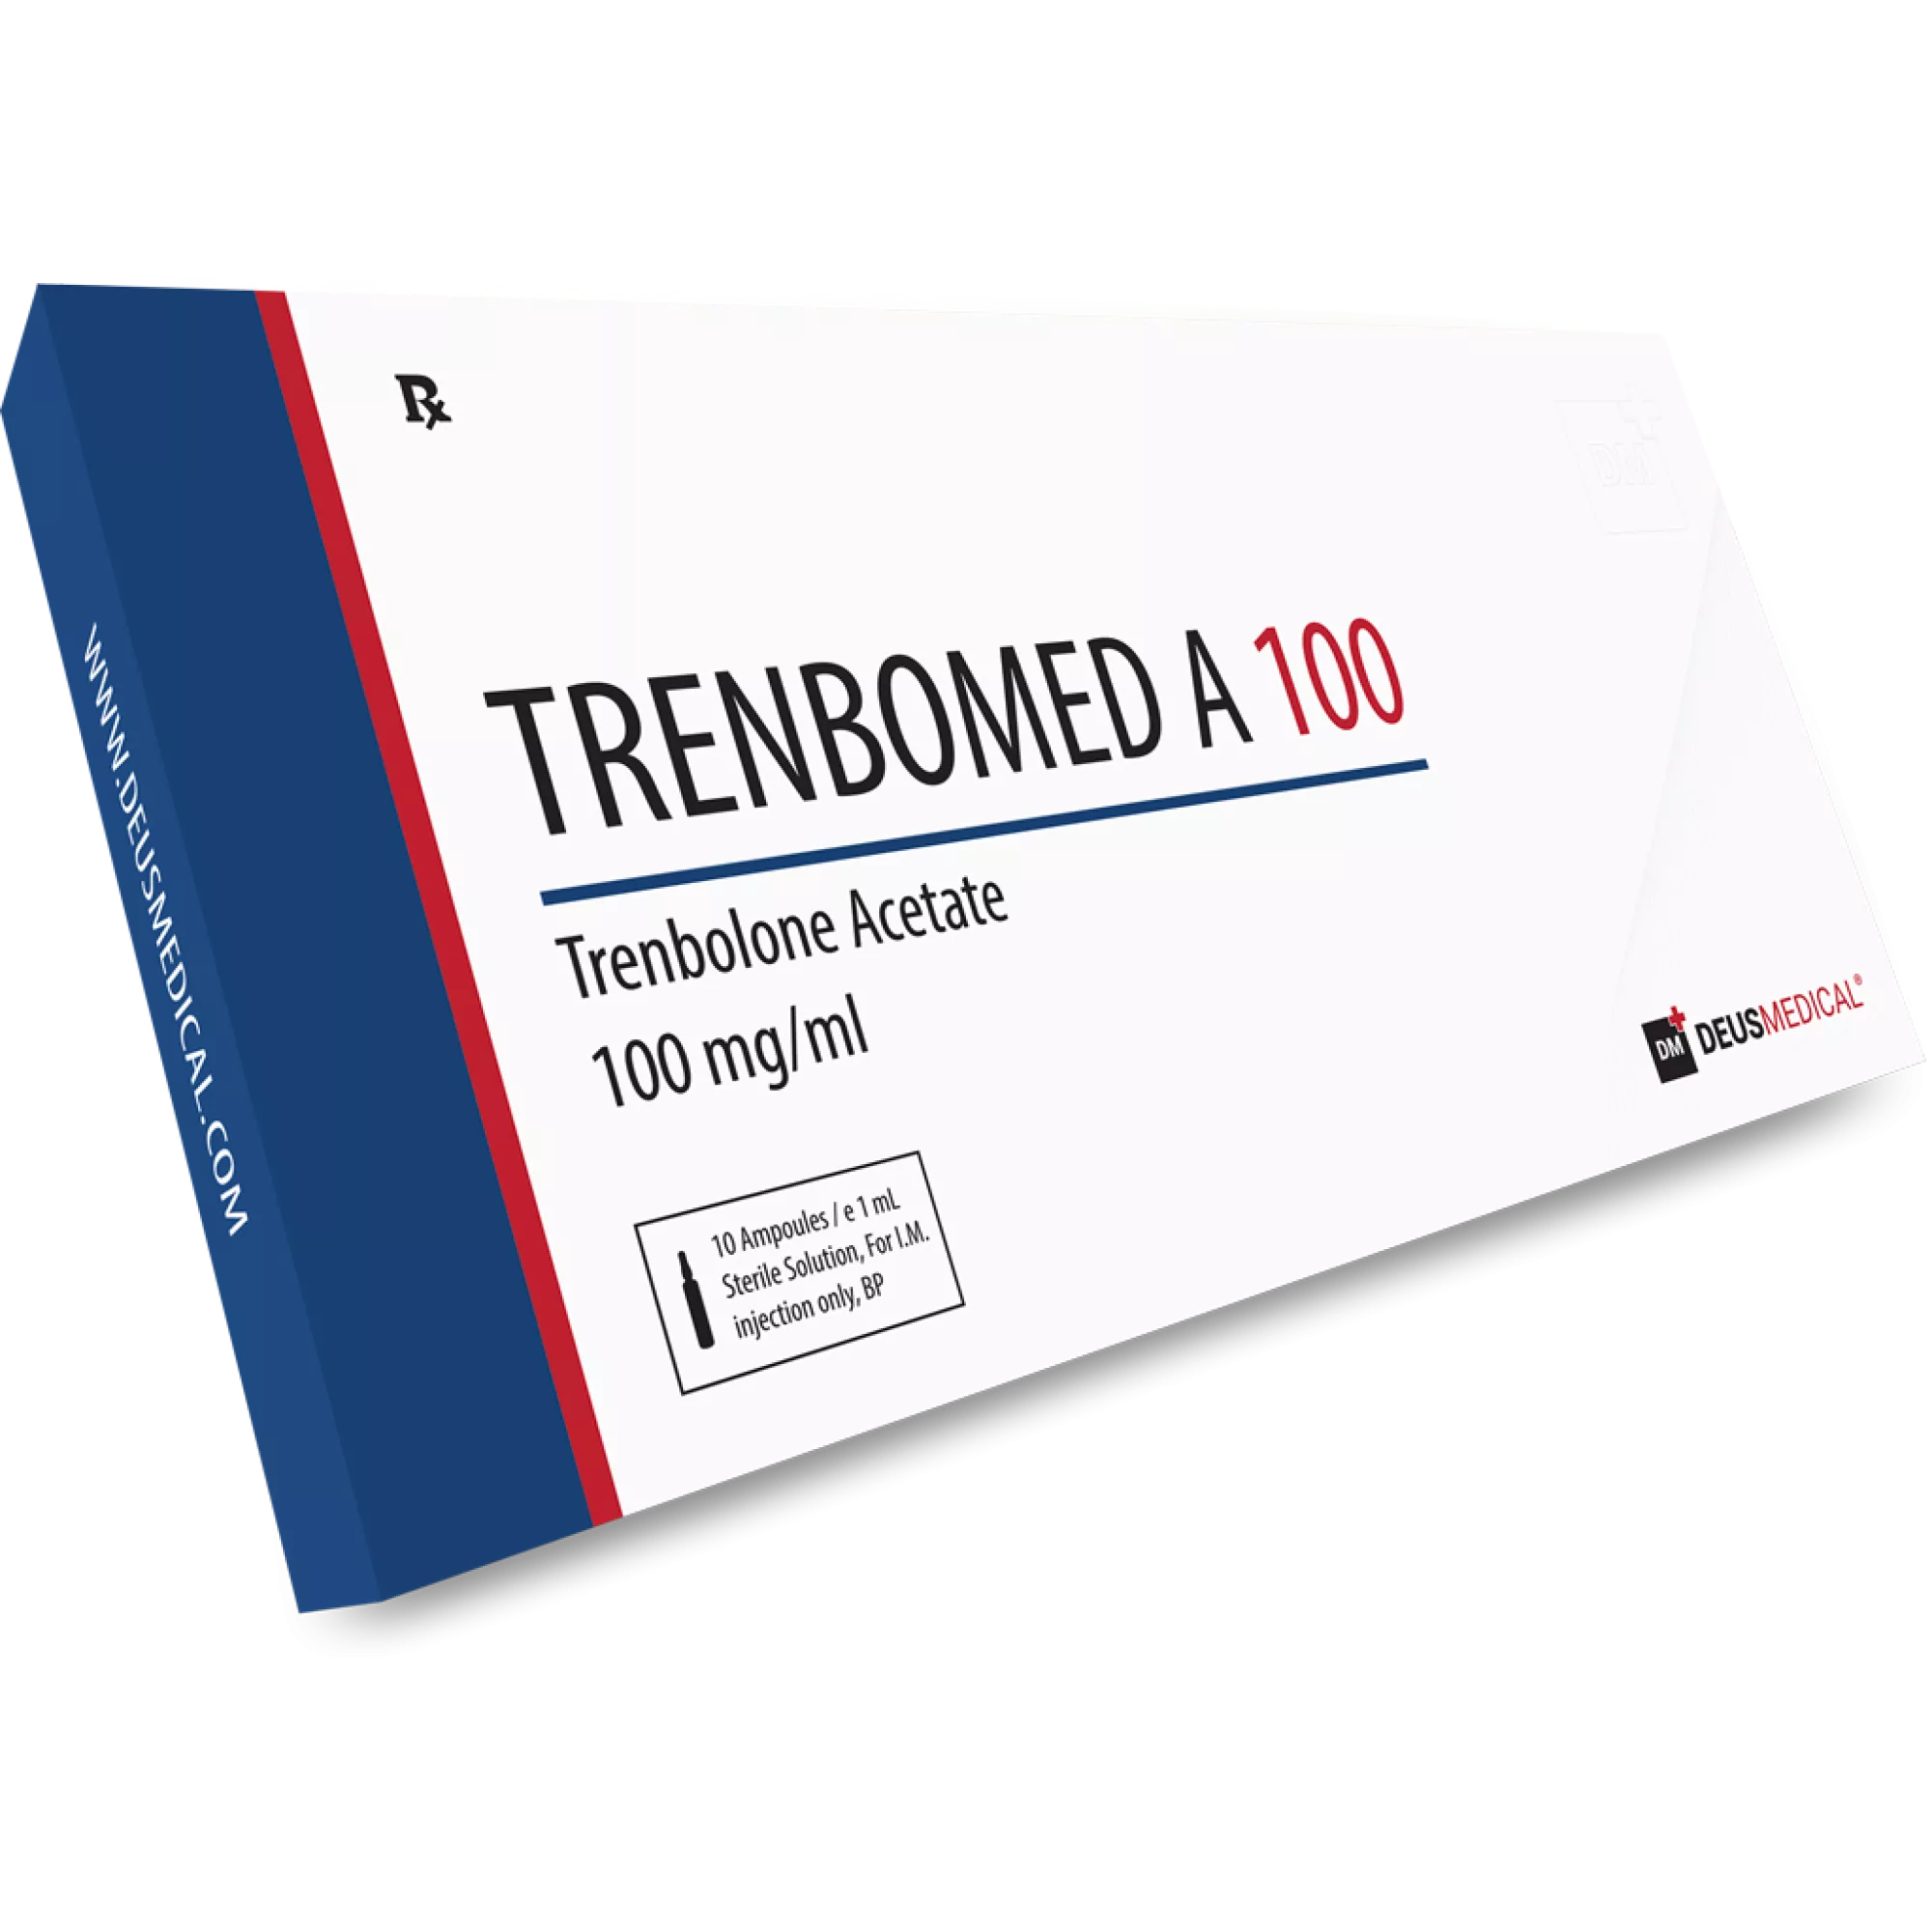 TRENBOMED A 100 (trenbolonacetat), Deus Medical, köp steroider online - www.deuspower.shop